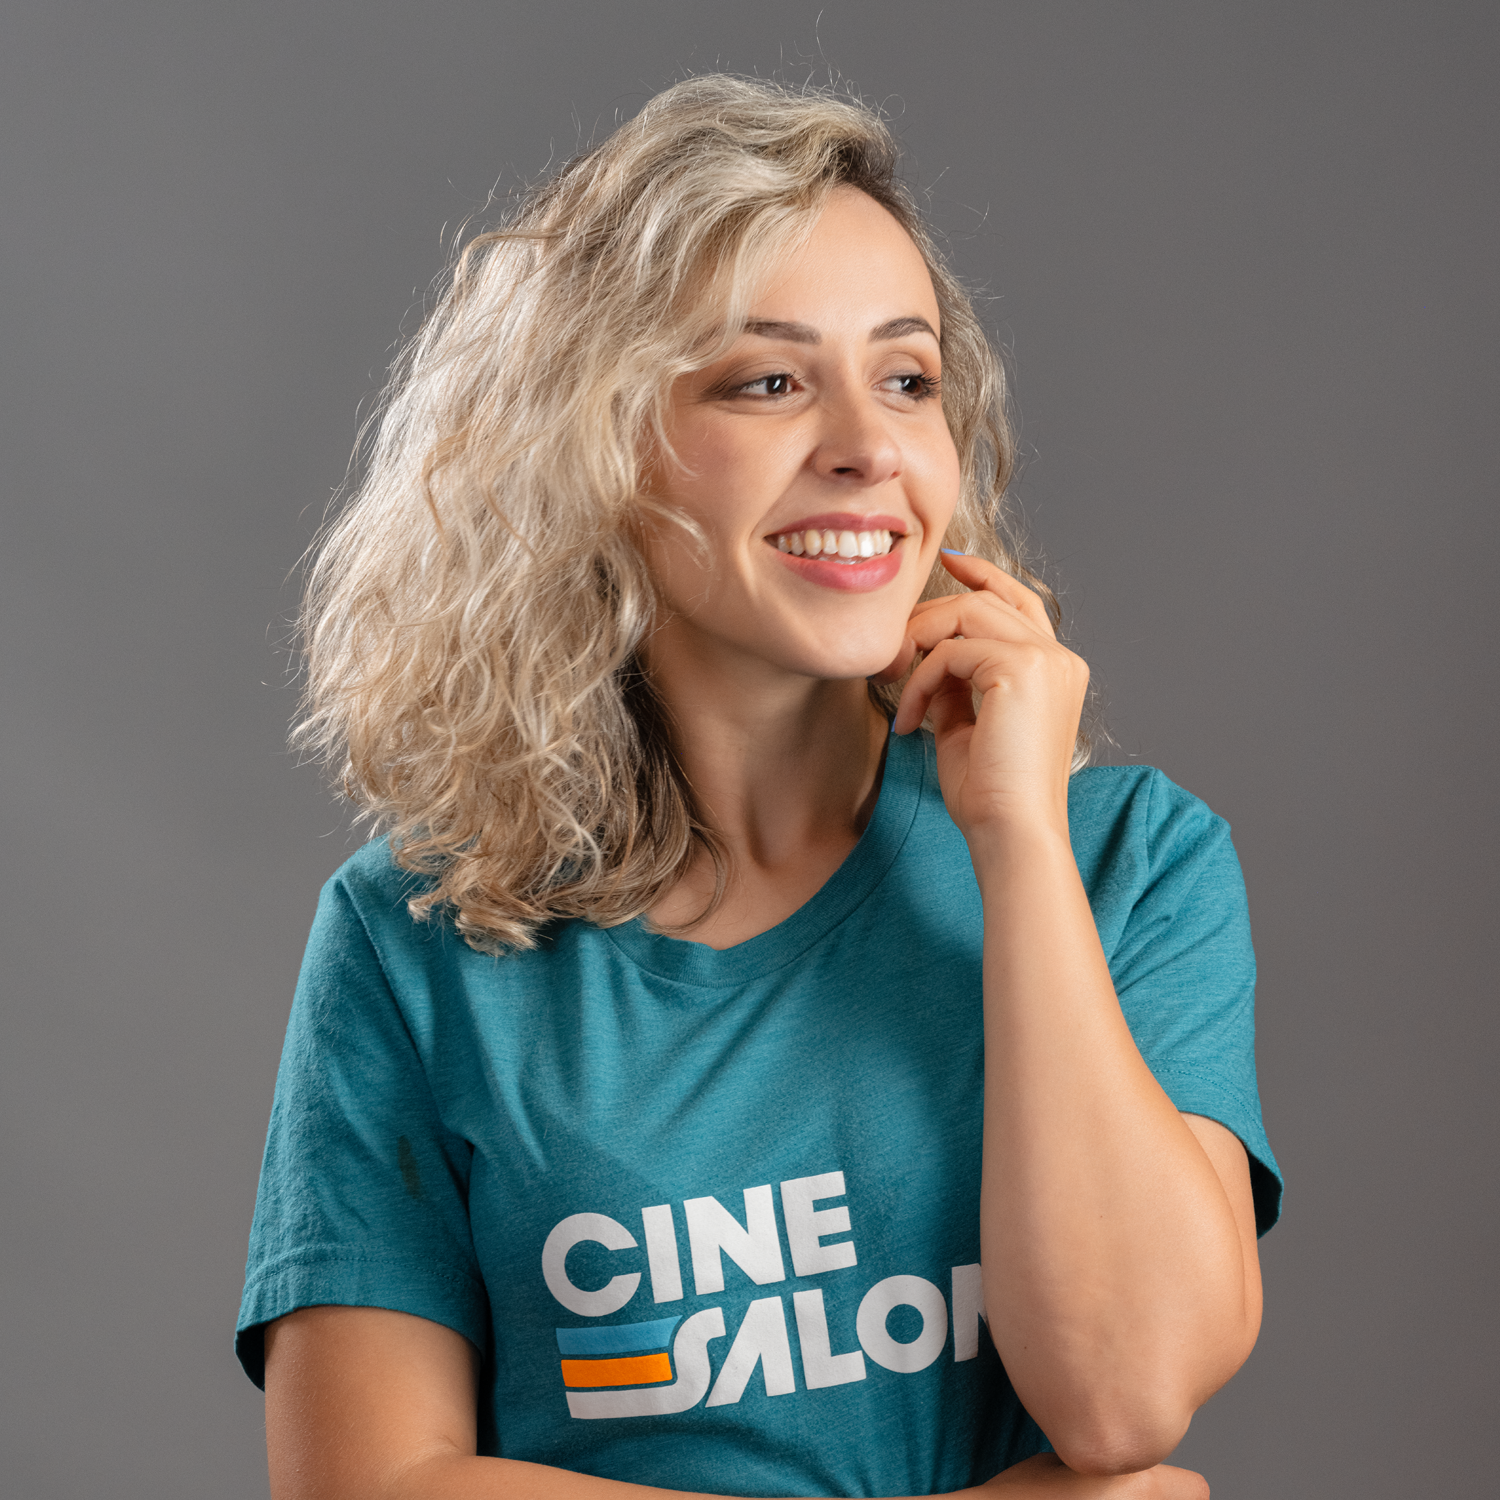 A woman wearing a blue t-shirt that says cine salon